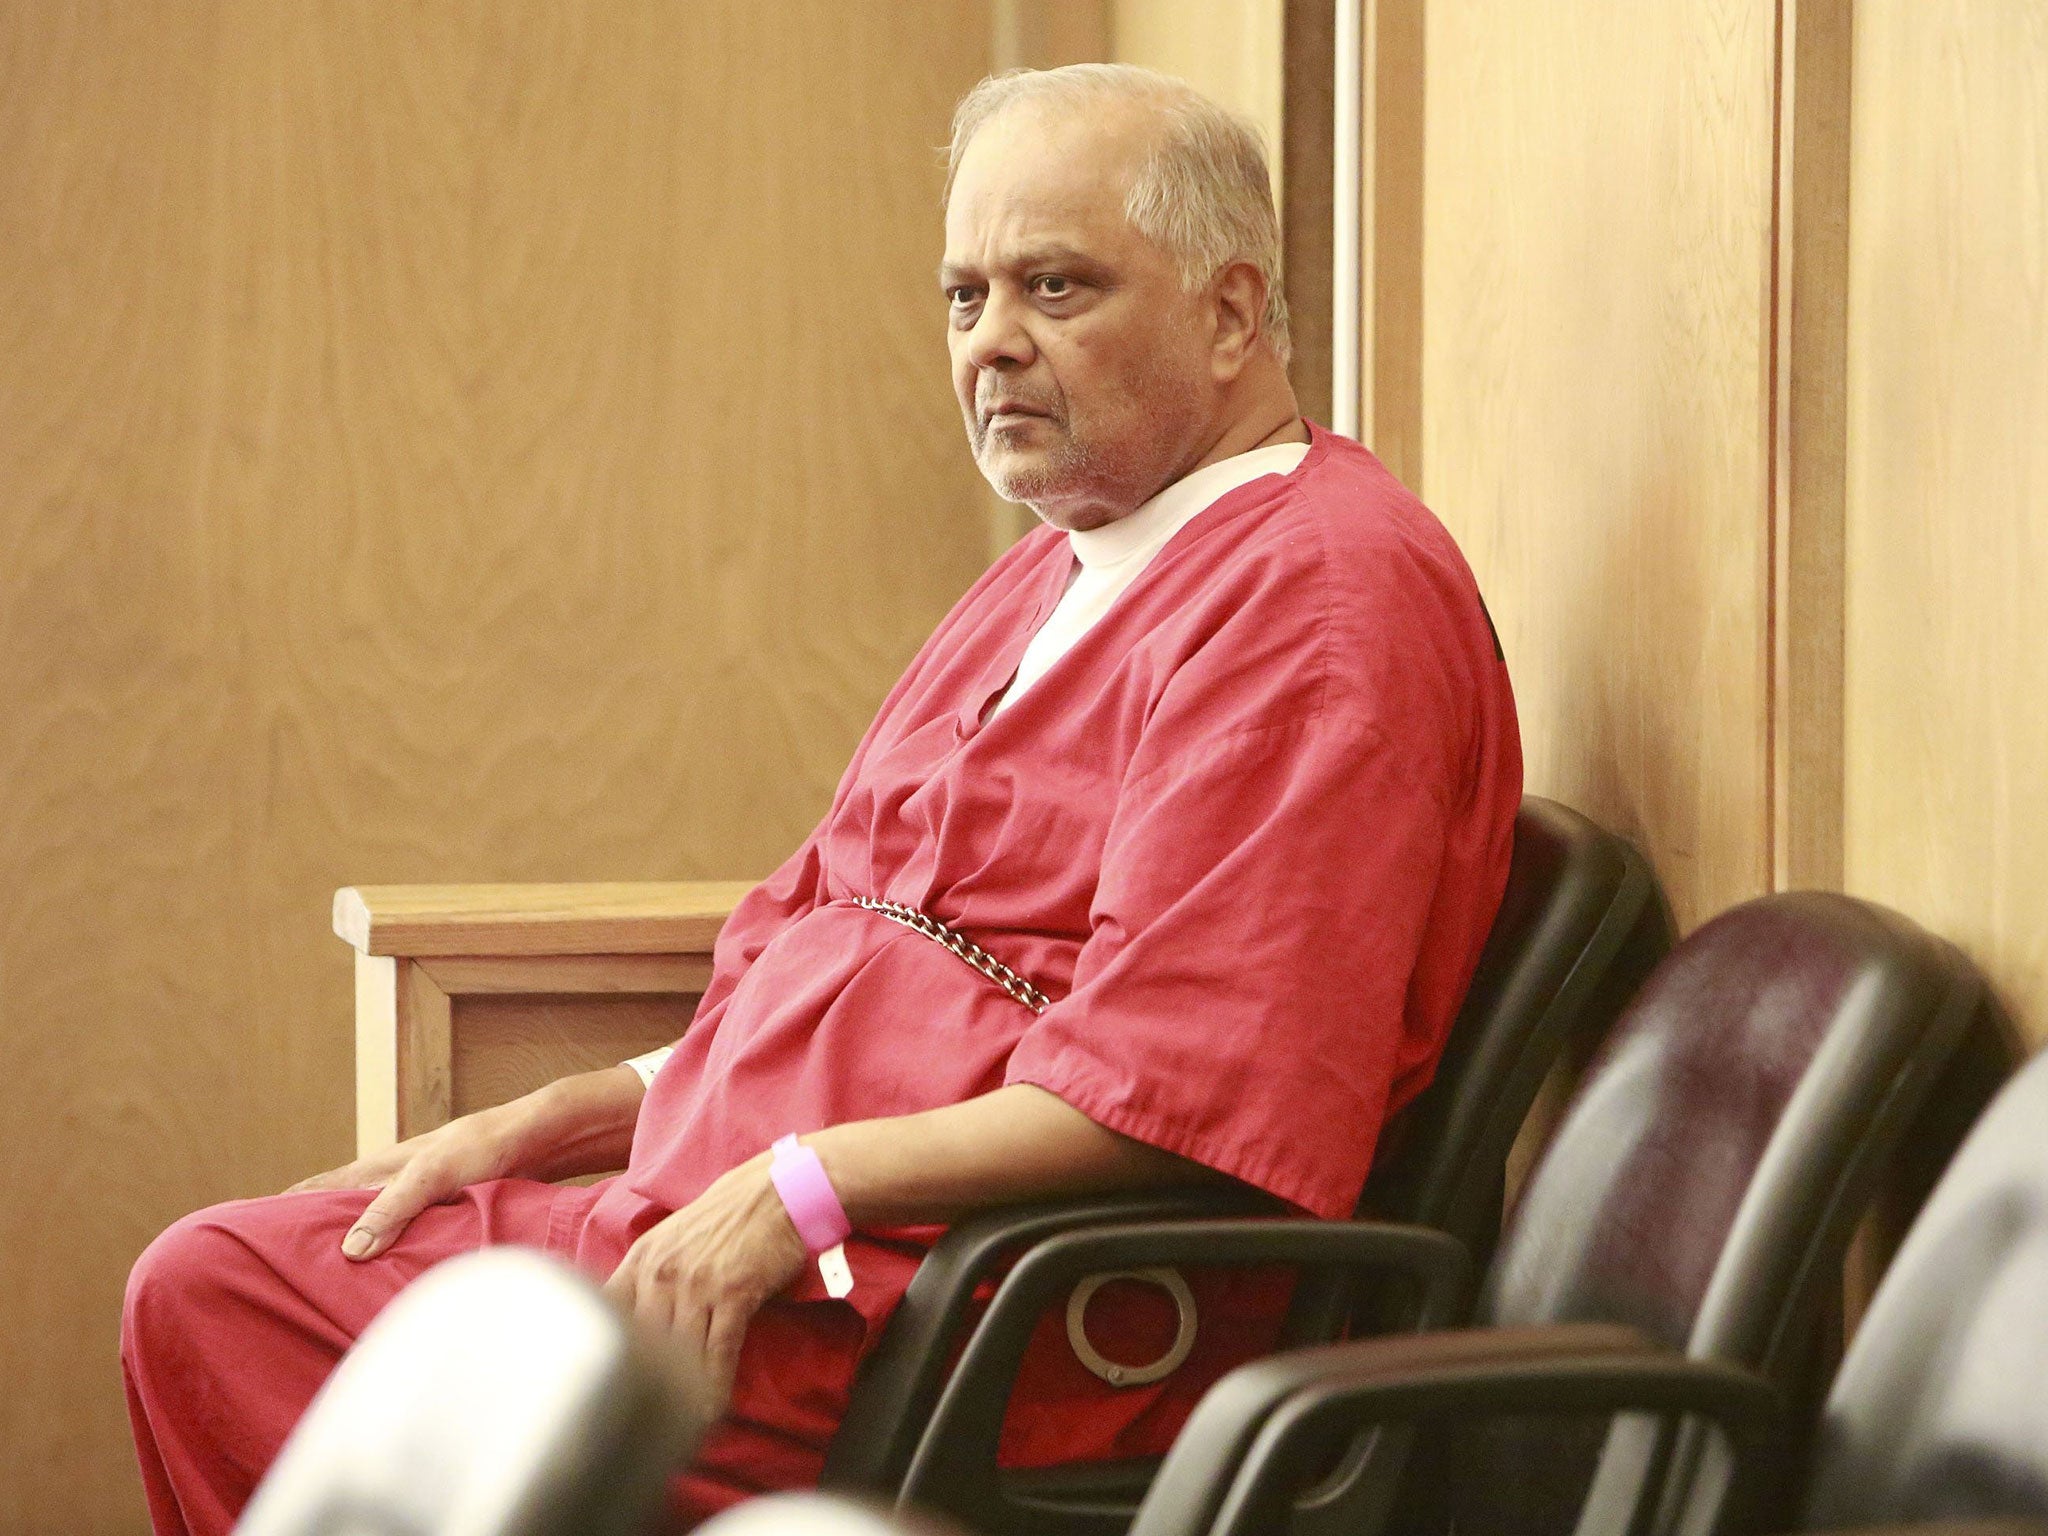 Krishna Maharaj sits in Circuit Court during a legal hearing in Miami, Florida, November 10, 2014